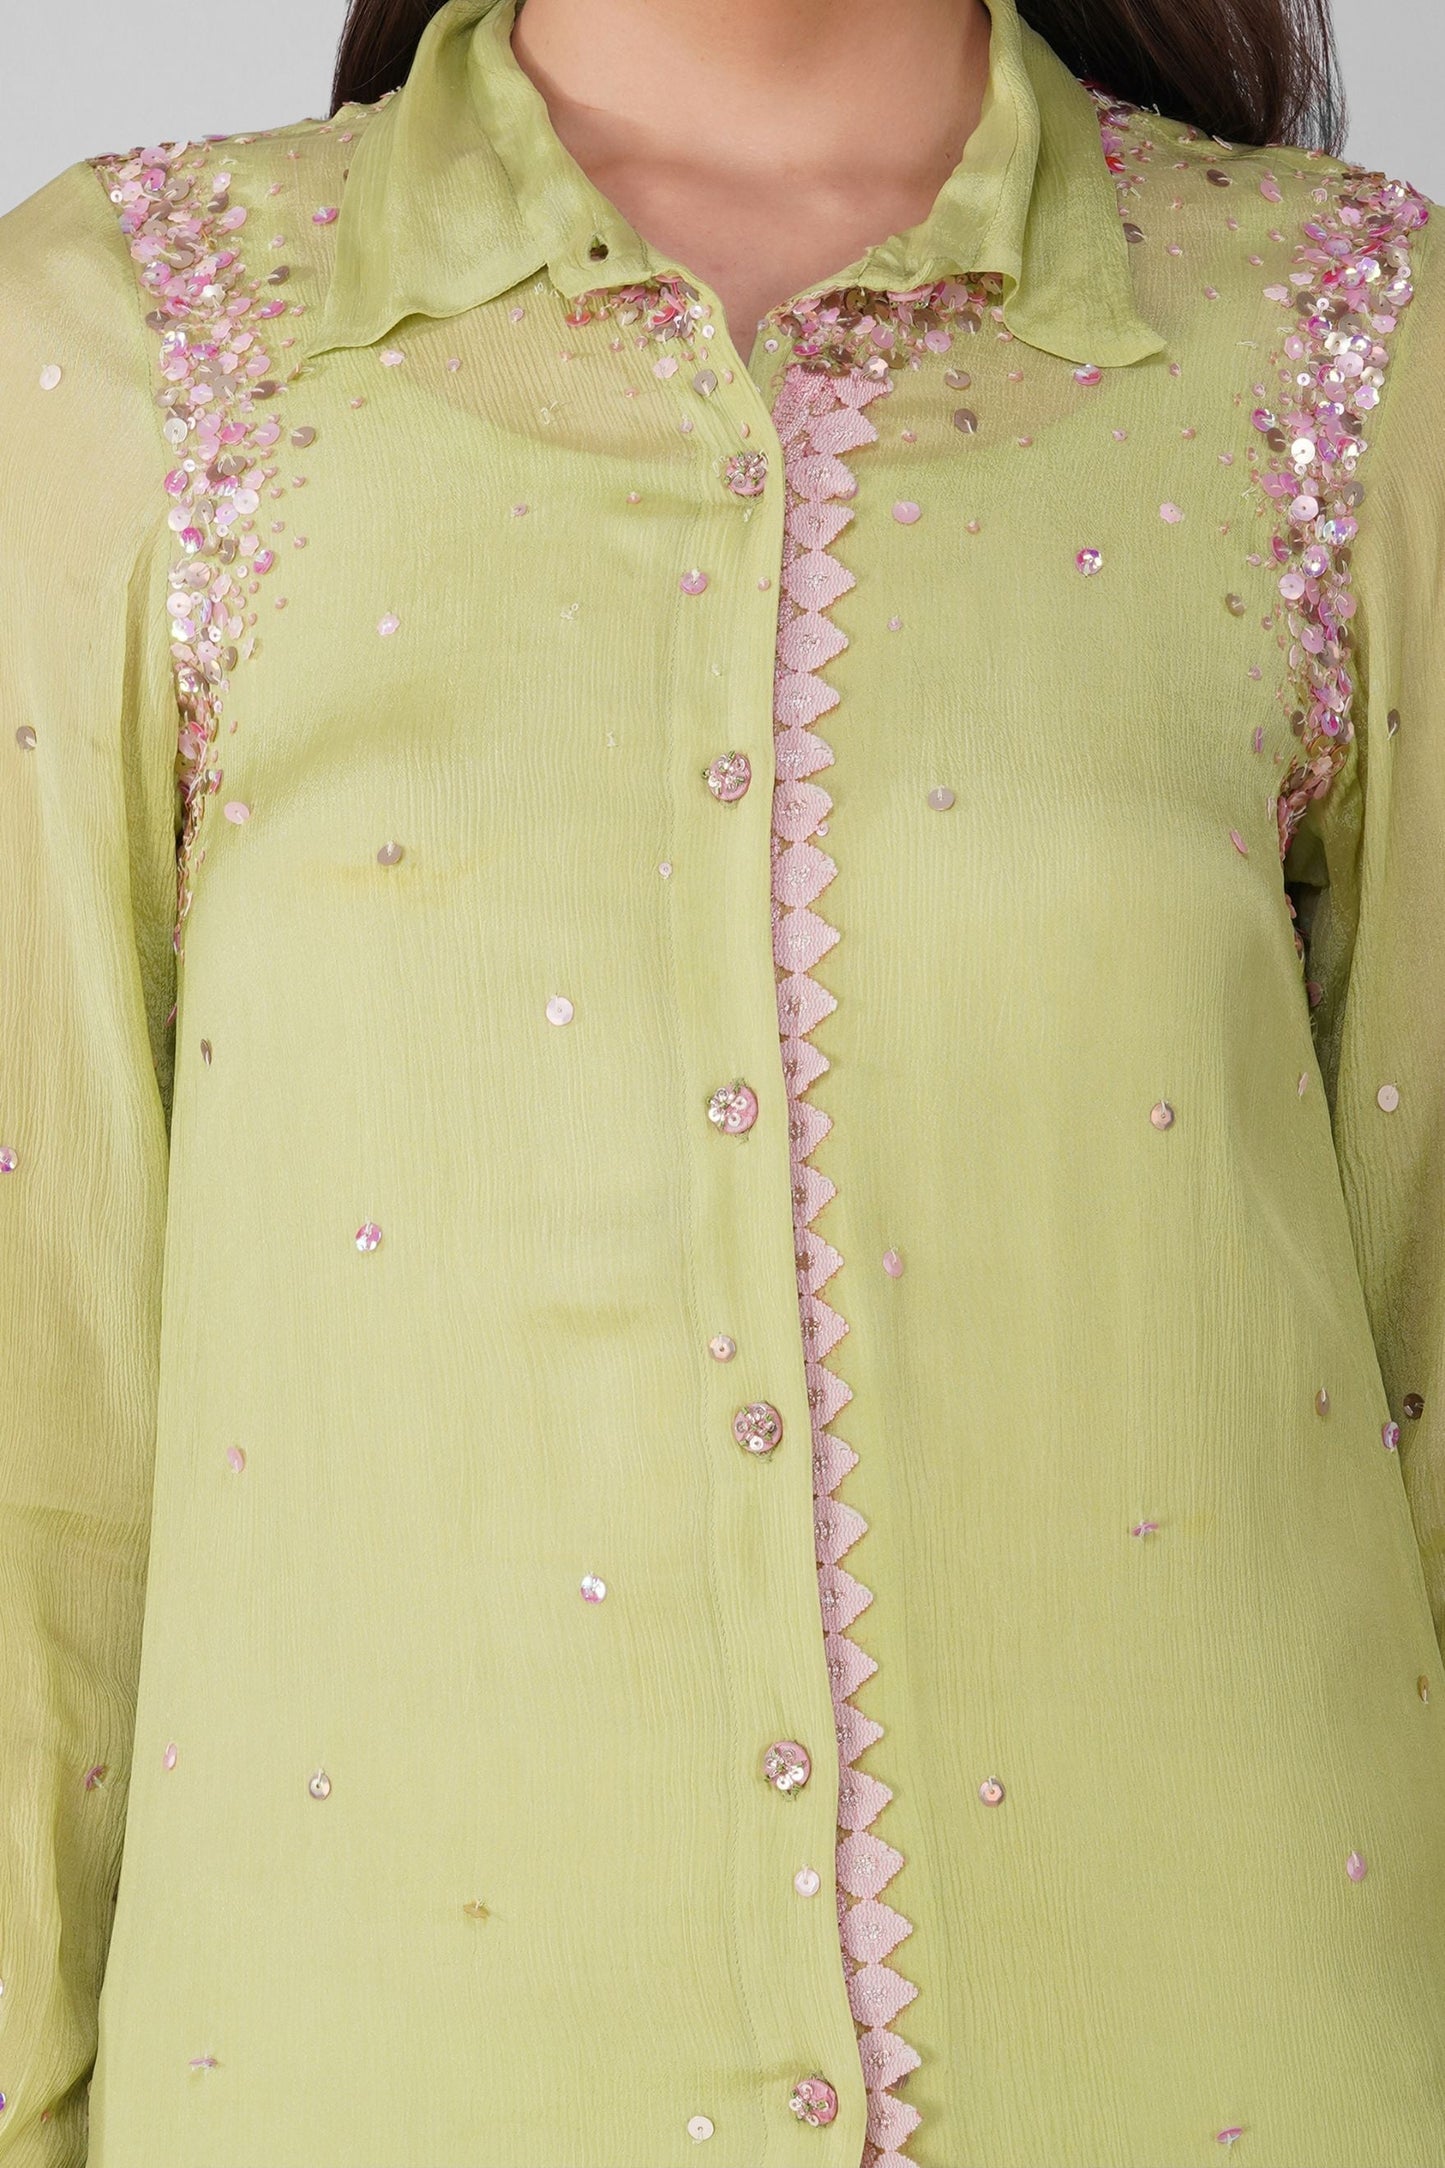 Green Chiffon Shirt Set at Kamakhyaa by Devyani Mehrotra. This item is Chiffon, Embellished, Green, Indian Wear, Natural, Party Wear, Regular Fit, Womenswear